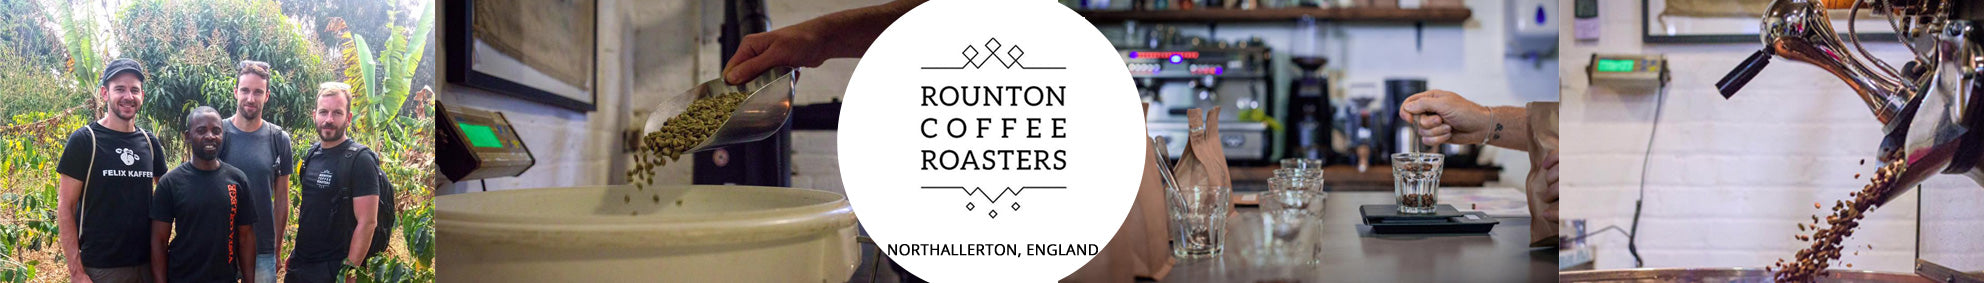 Subscription Coffee Roaster - Rounton Coffee Roasters